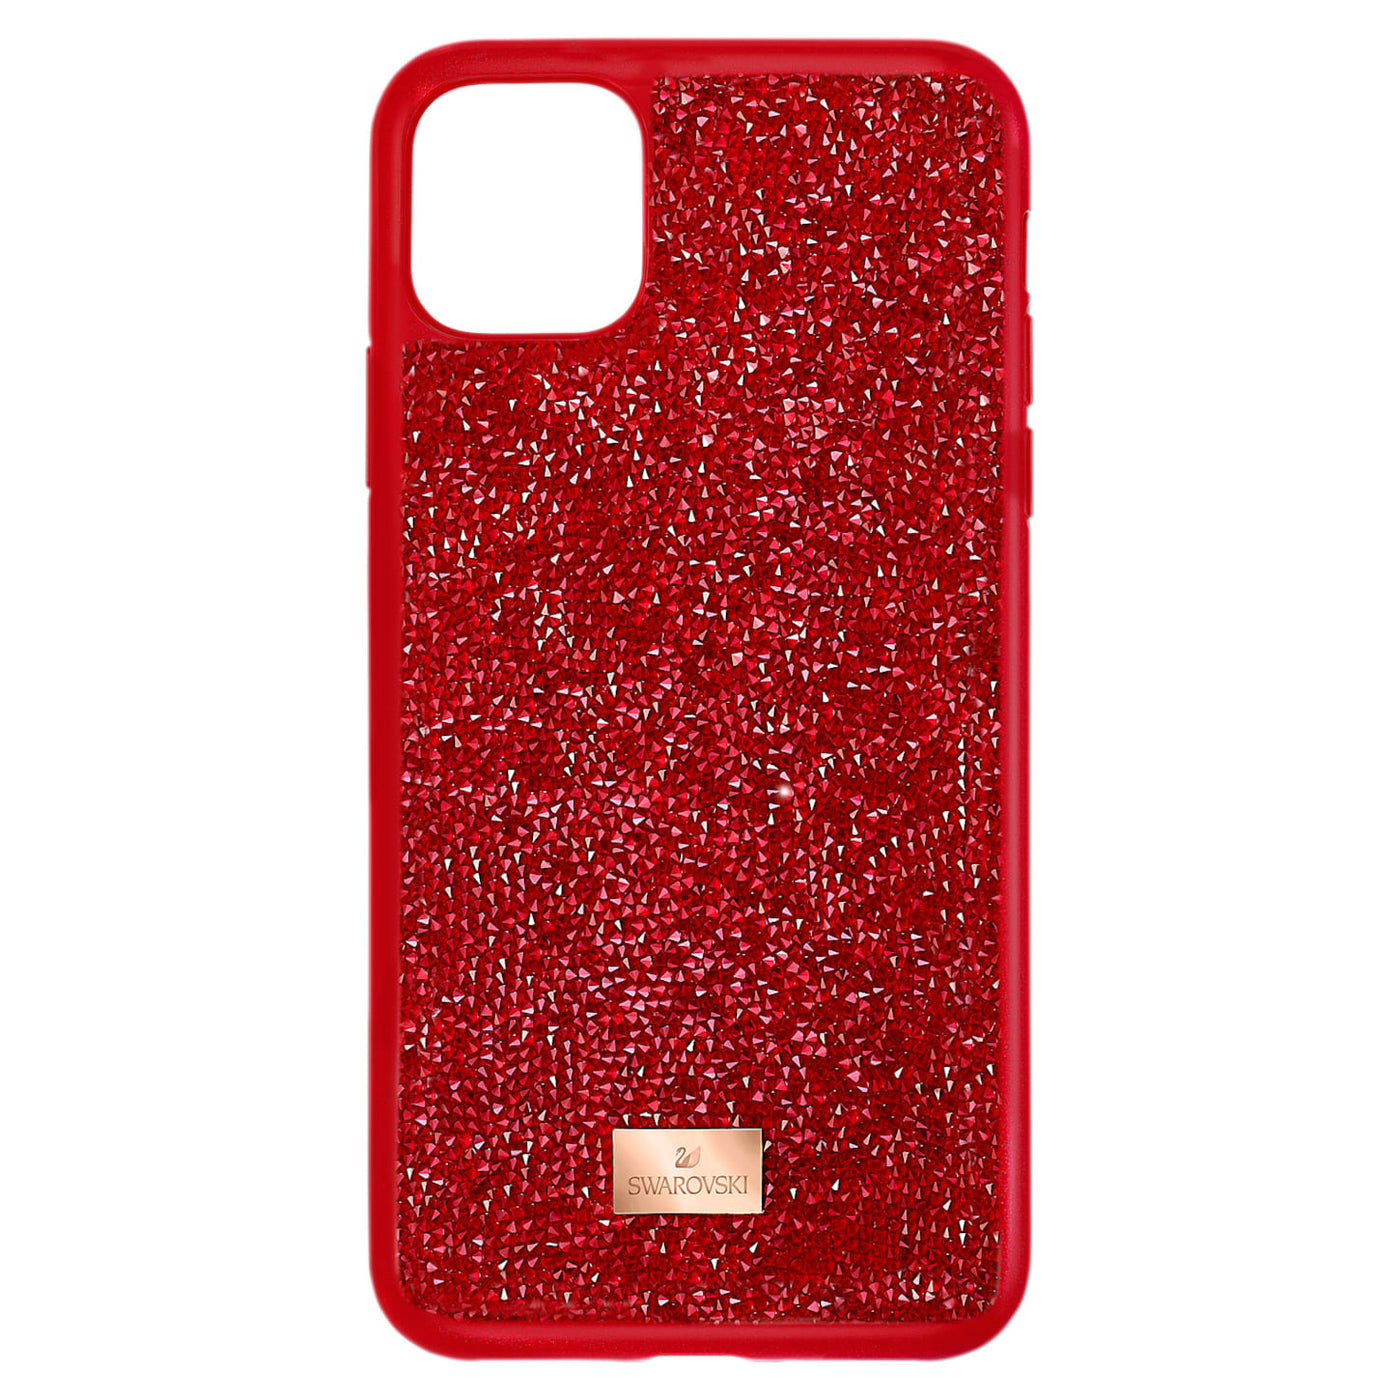 SWAROVSKI כיסוי לאייפון GLAM ROCK IPhone® 12 MINI אדום